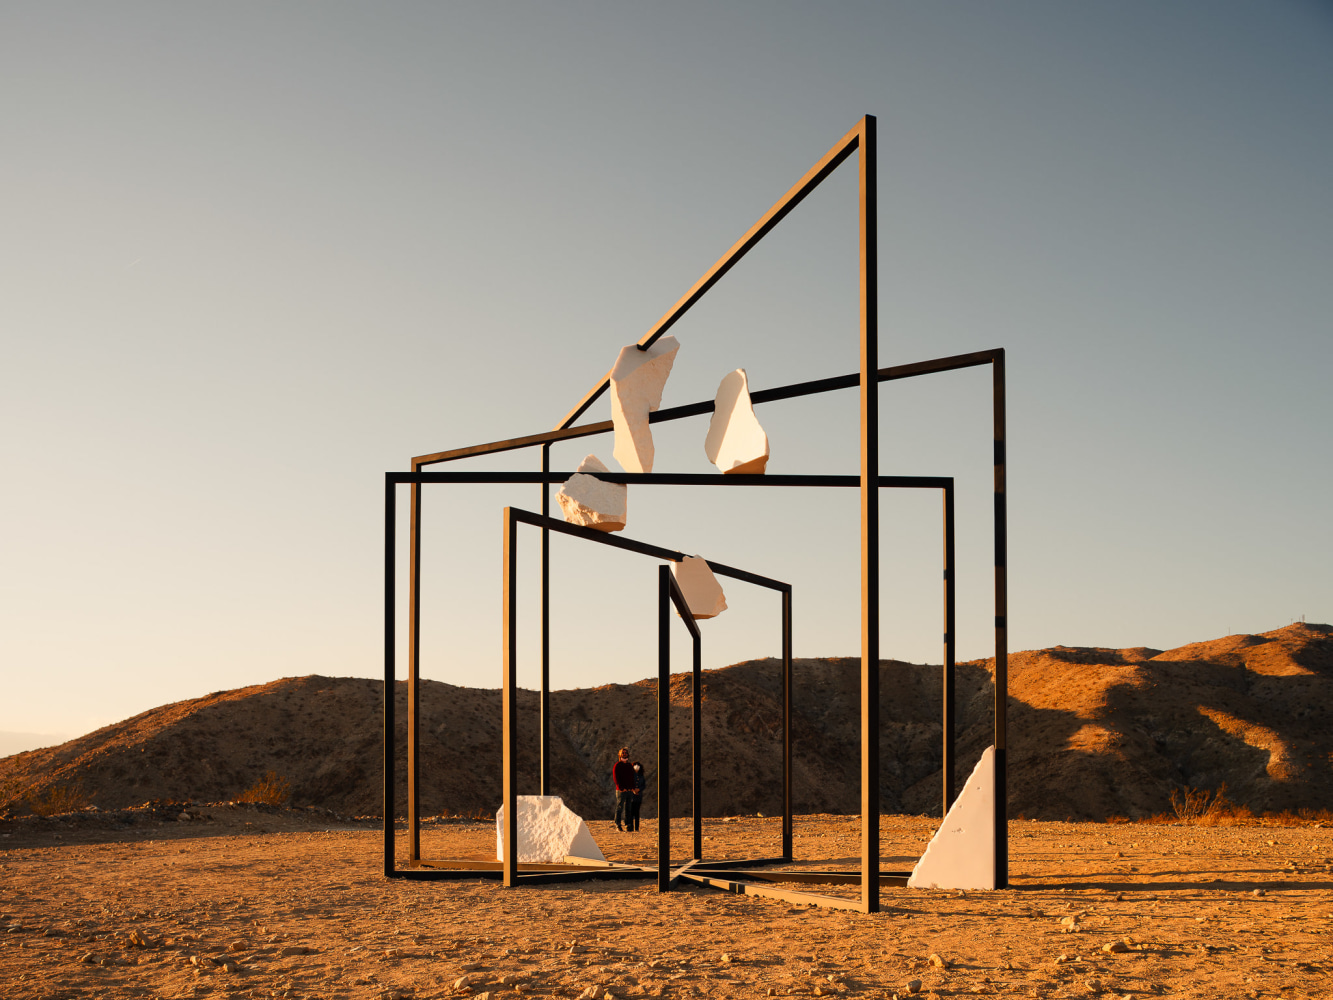 Alicja Kwade,&amp;nbsp;ParaPivot (sempiternal clouds),&amp;nbsp;2021

Installation view: Desert X 2021

Photo&amp;nbsp;by Lance Gerber, courtesy Desert X and the artist.

&amp;nbsp;

&amp;nbsp;